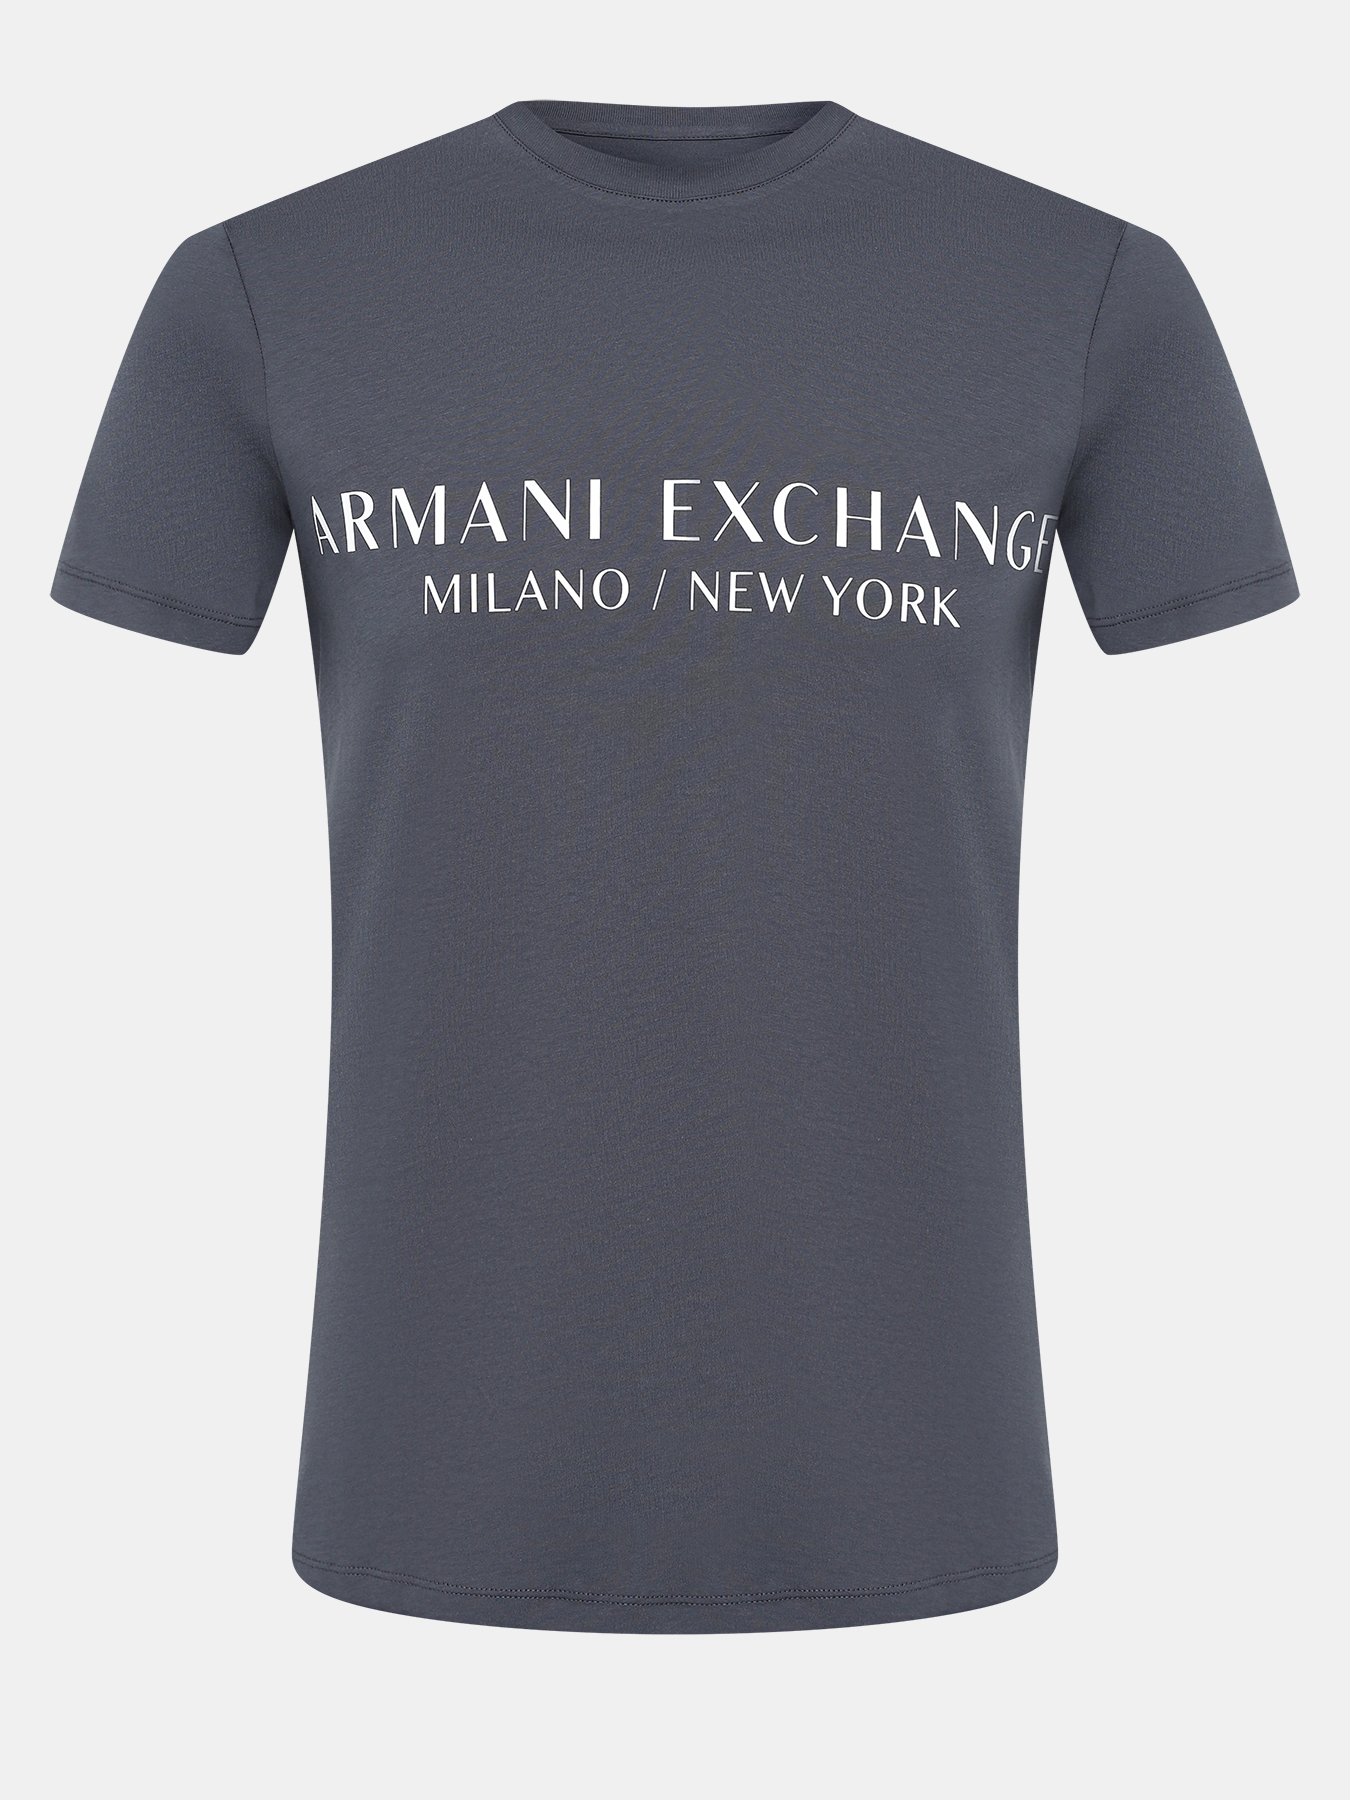 Футболка Armani Exchange 422425-045, цвет темно-серый, размер 52-54 - фото 1